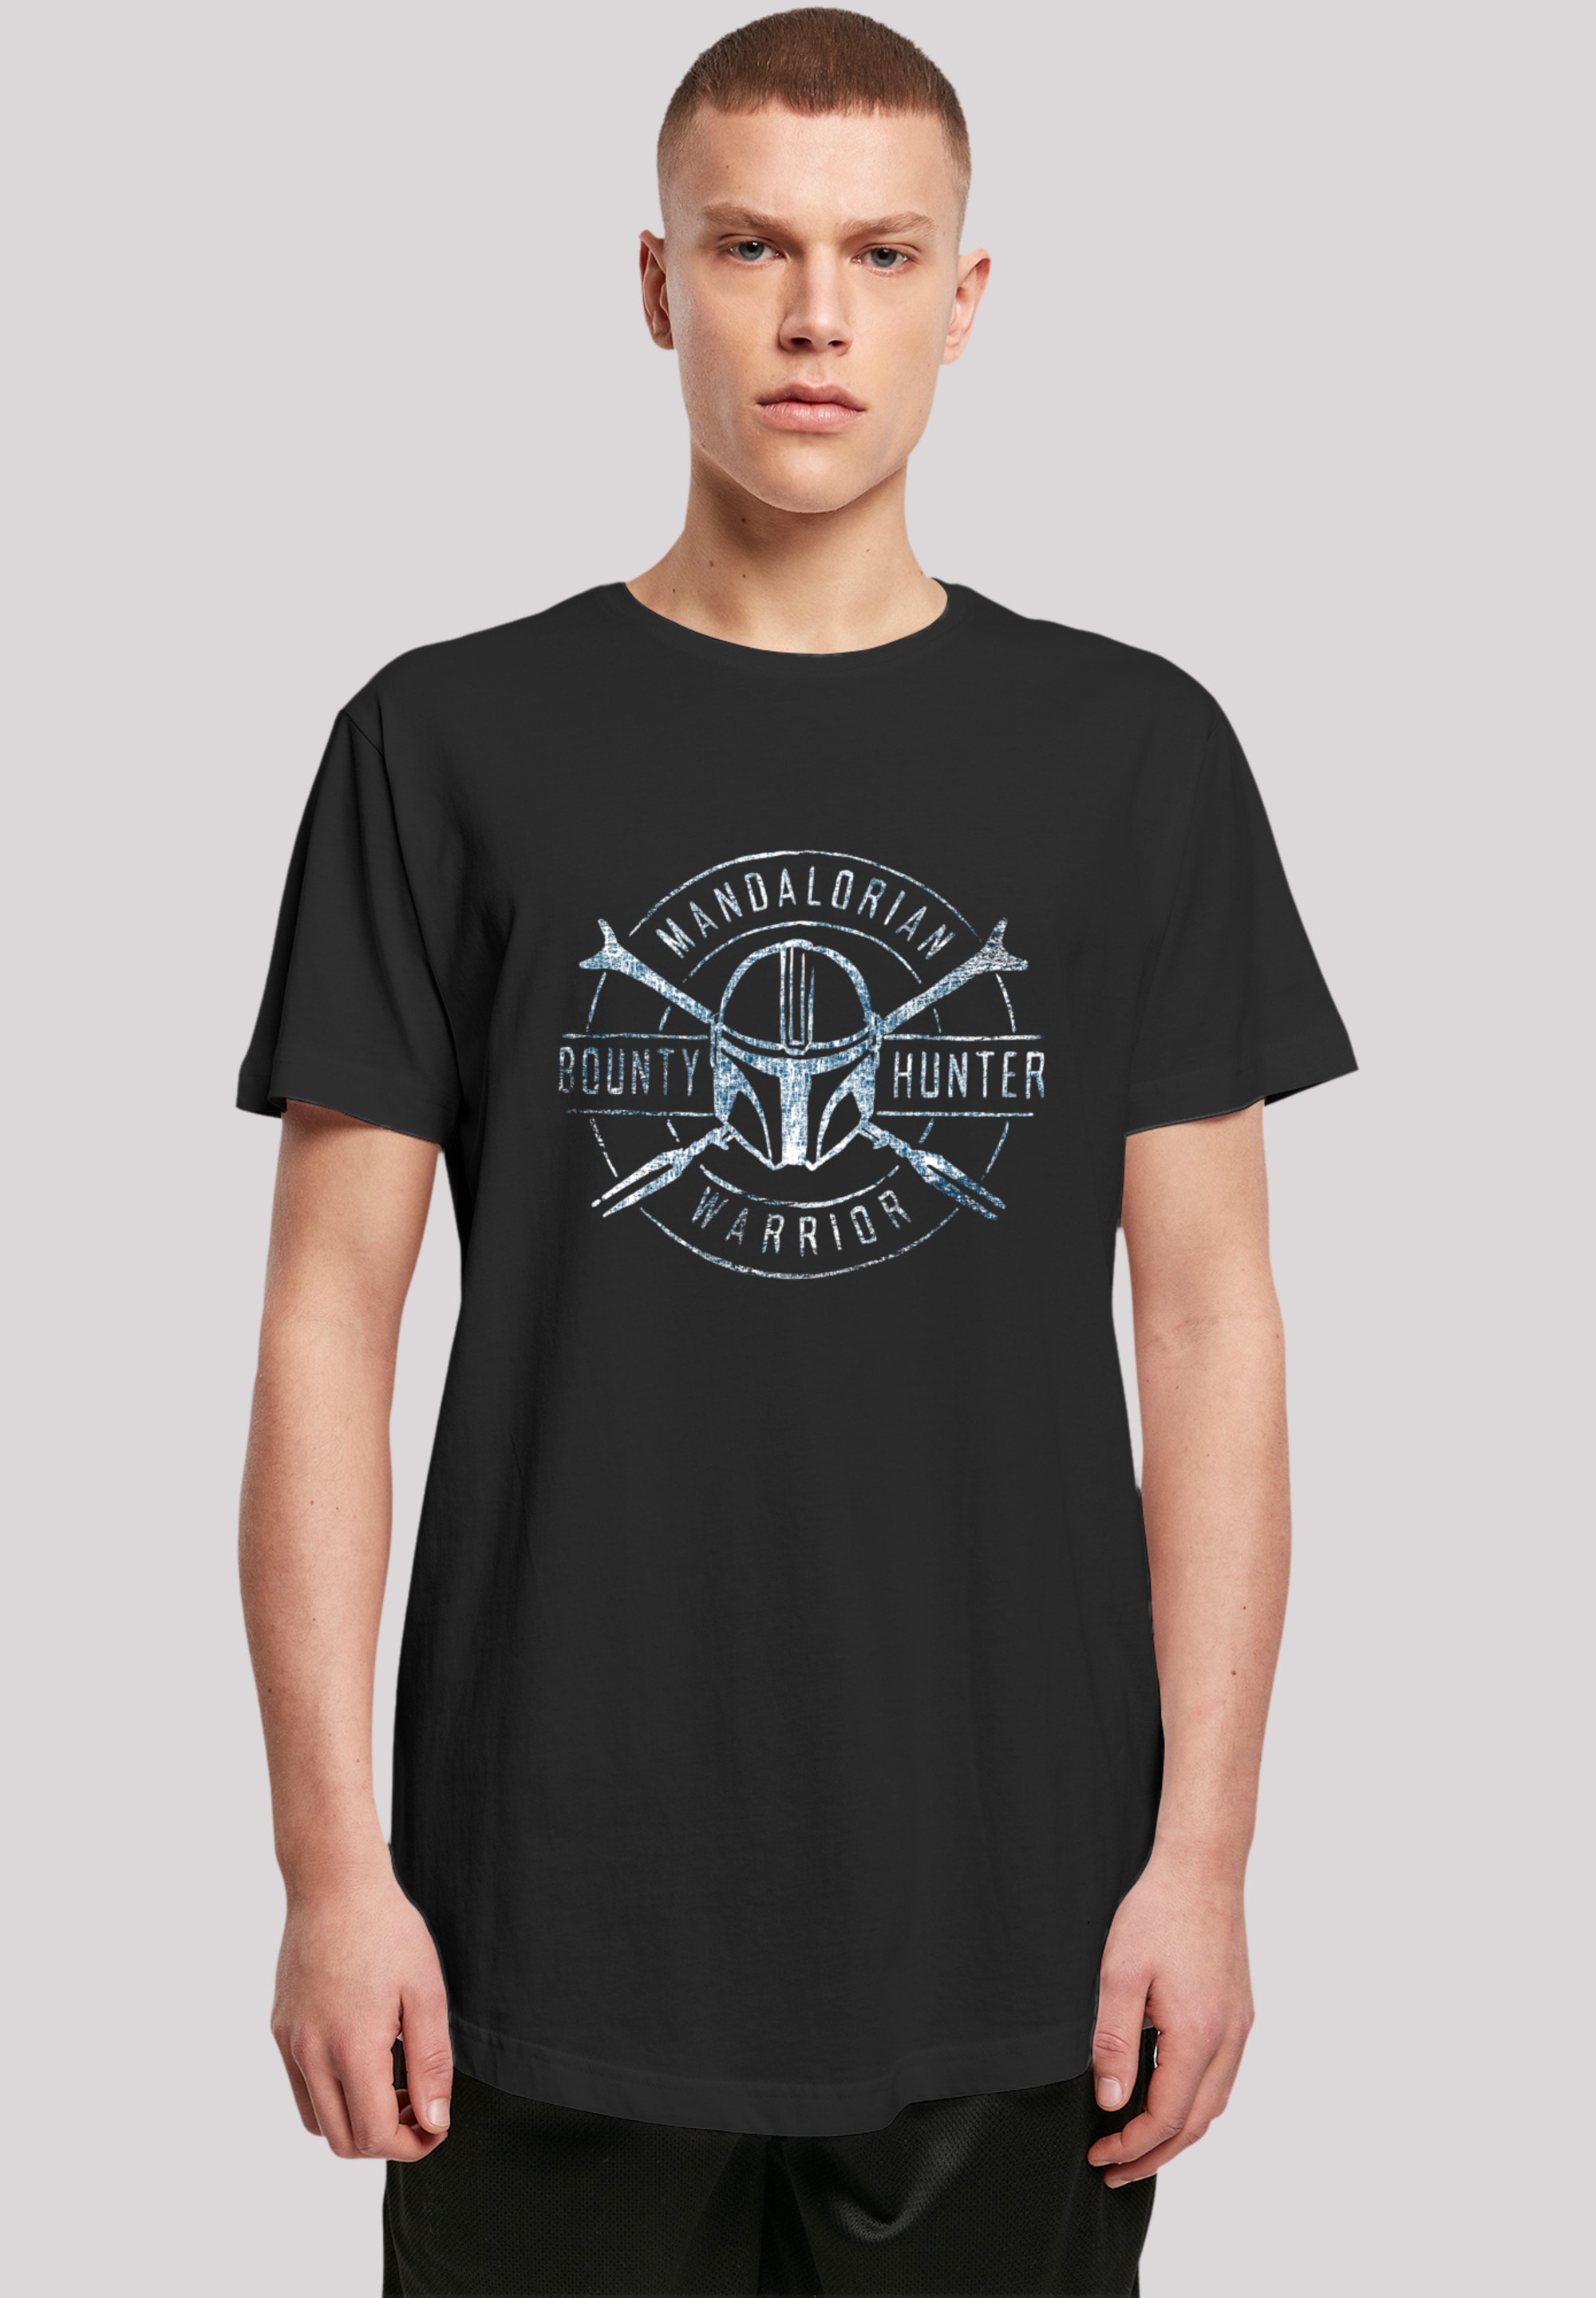 F4NT4STIC T-Shirt "Star Wars The Mandalorian Bounty Hunter", Premium Qualit günstig online kaufen